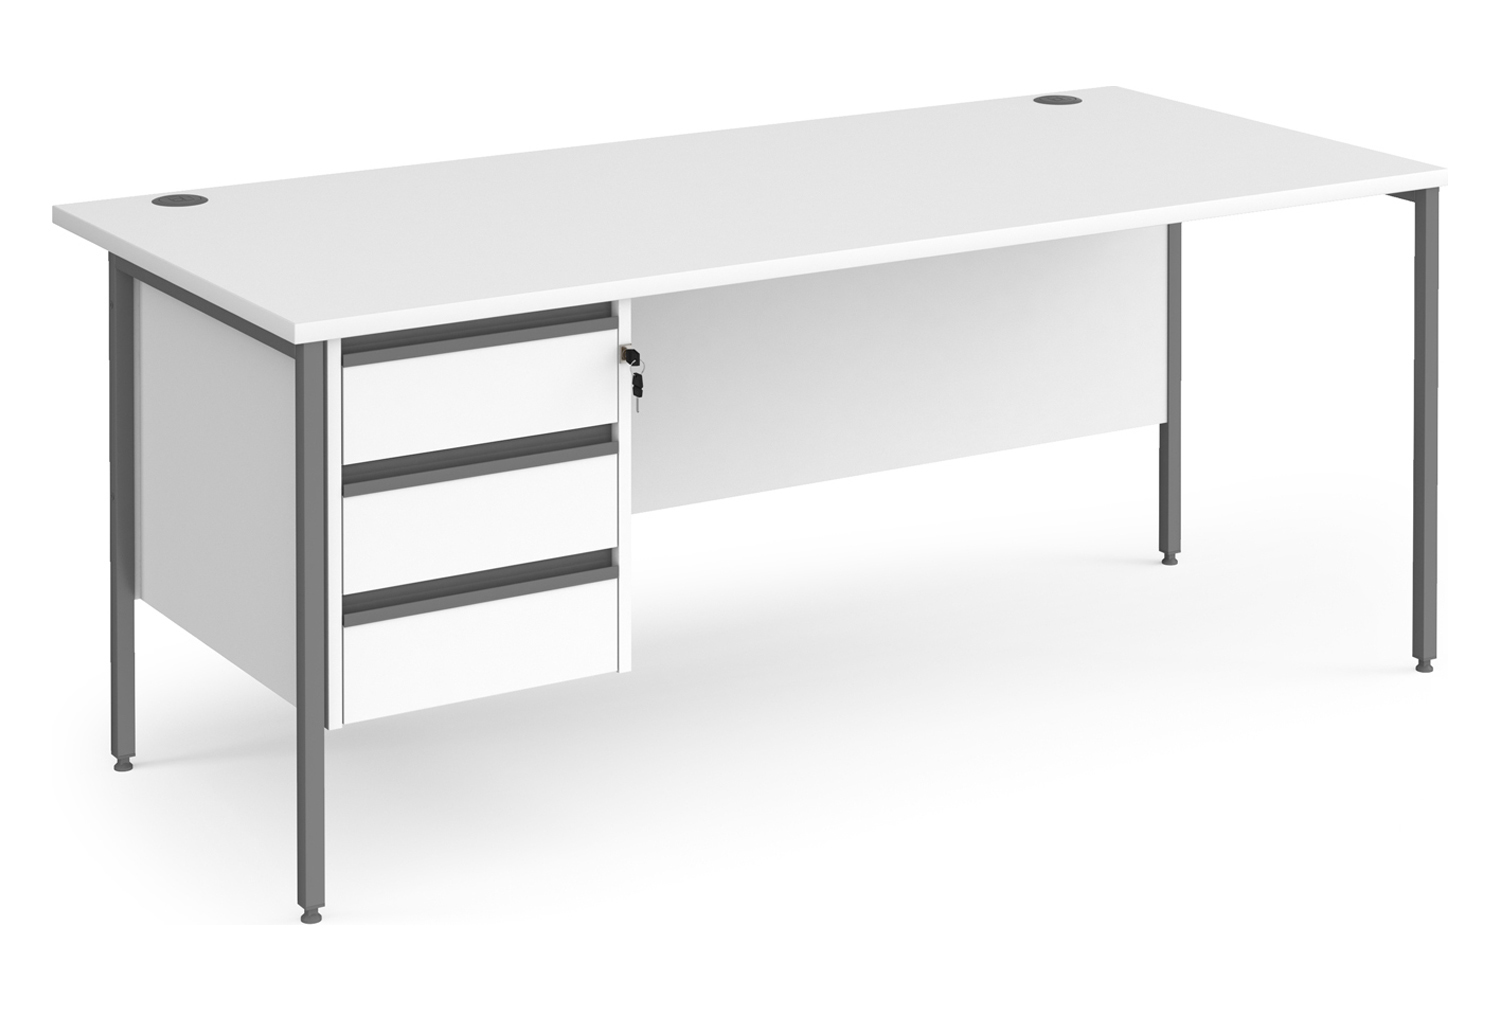 Value Line Classic+ Rectangular H-Leg Office Desk 3 Drawers (Graphite Leg), 180wx80dx73h (cm), White, Express Delivery